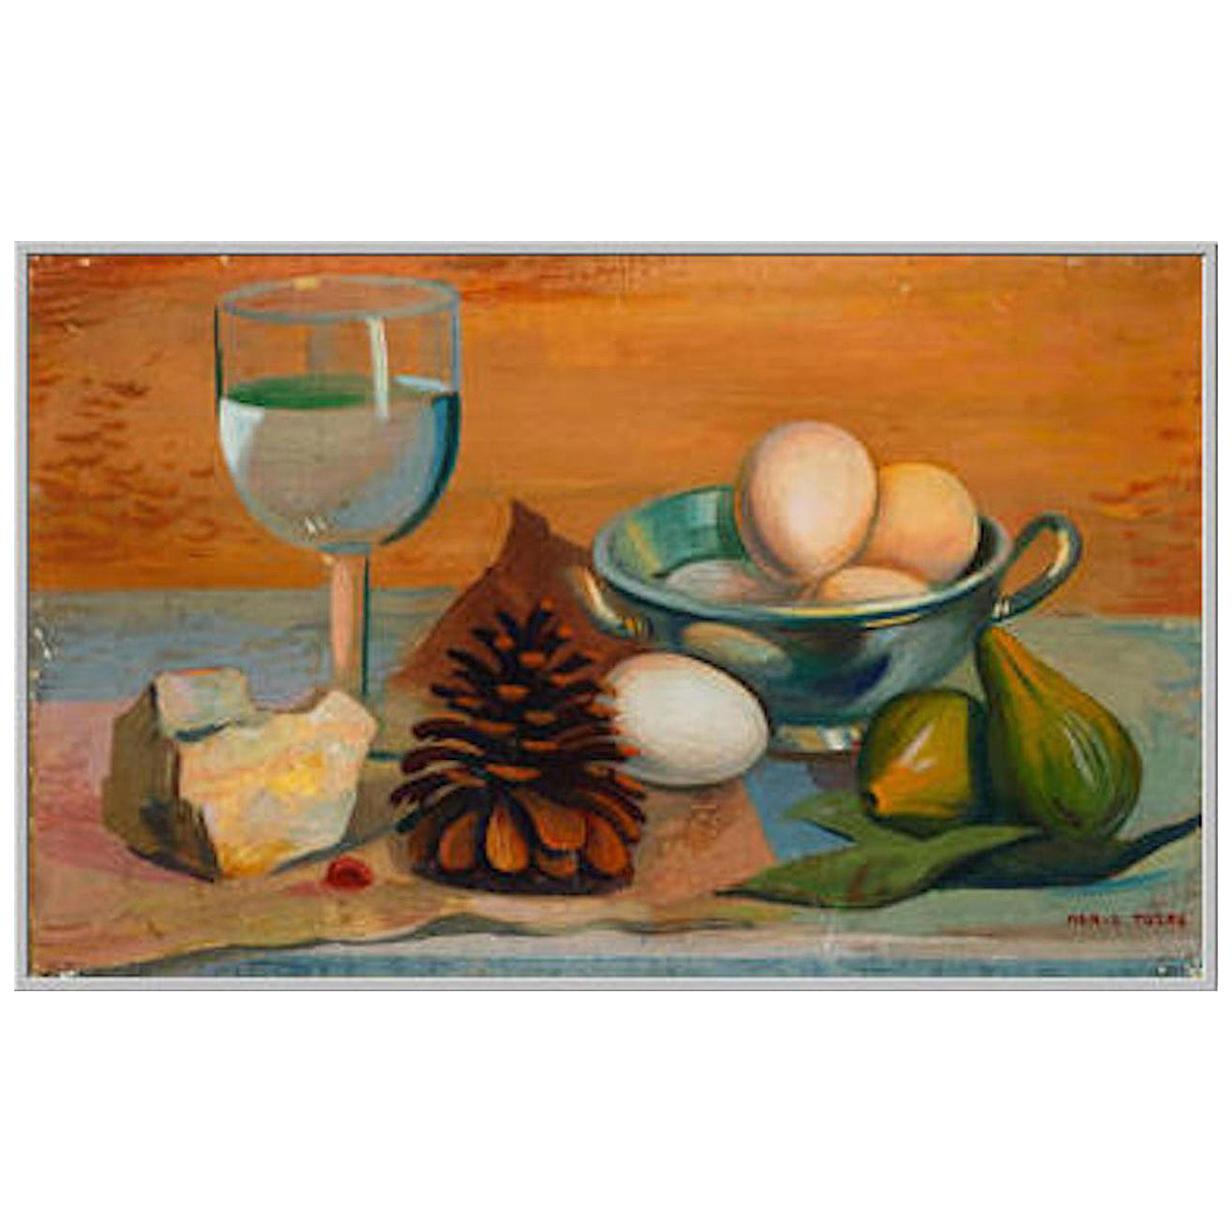 1937 Mario Tozzi "La Pigna" Oil on Canvas Painting